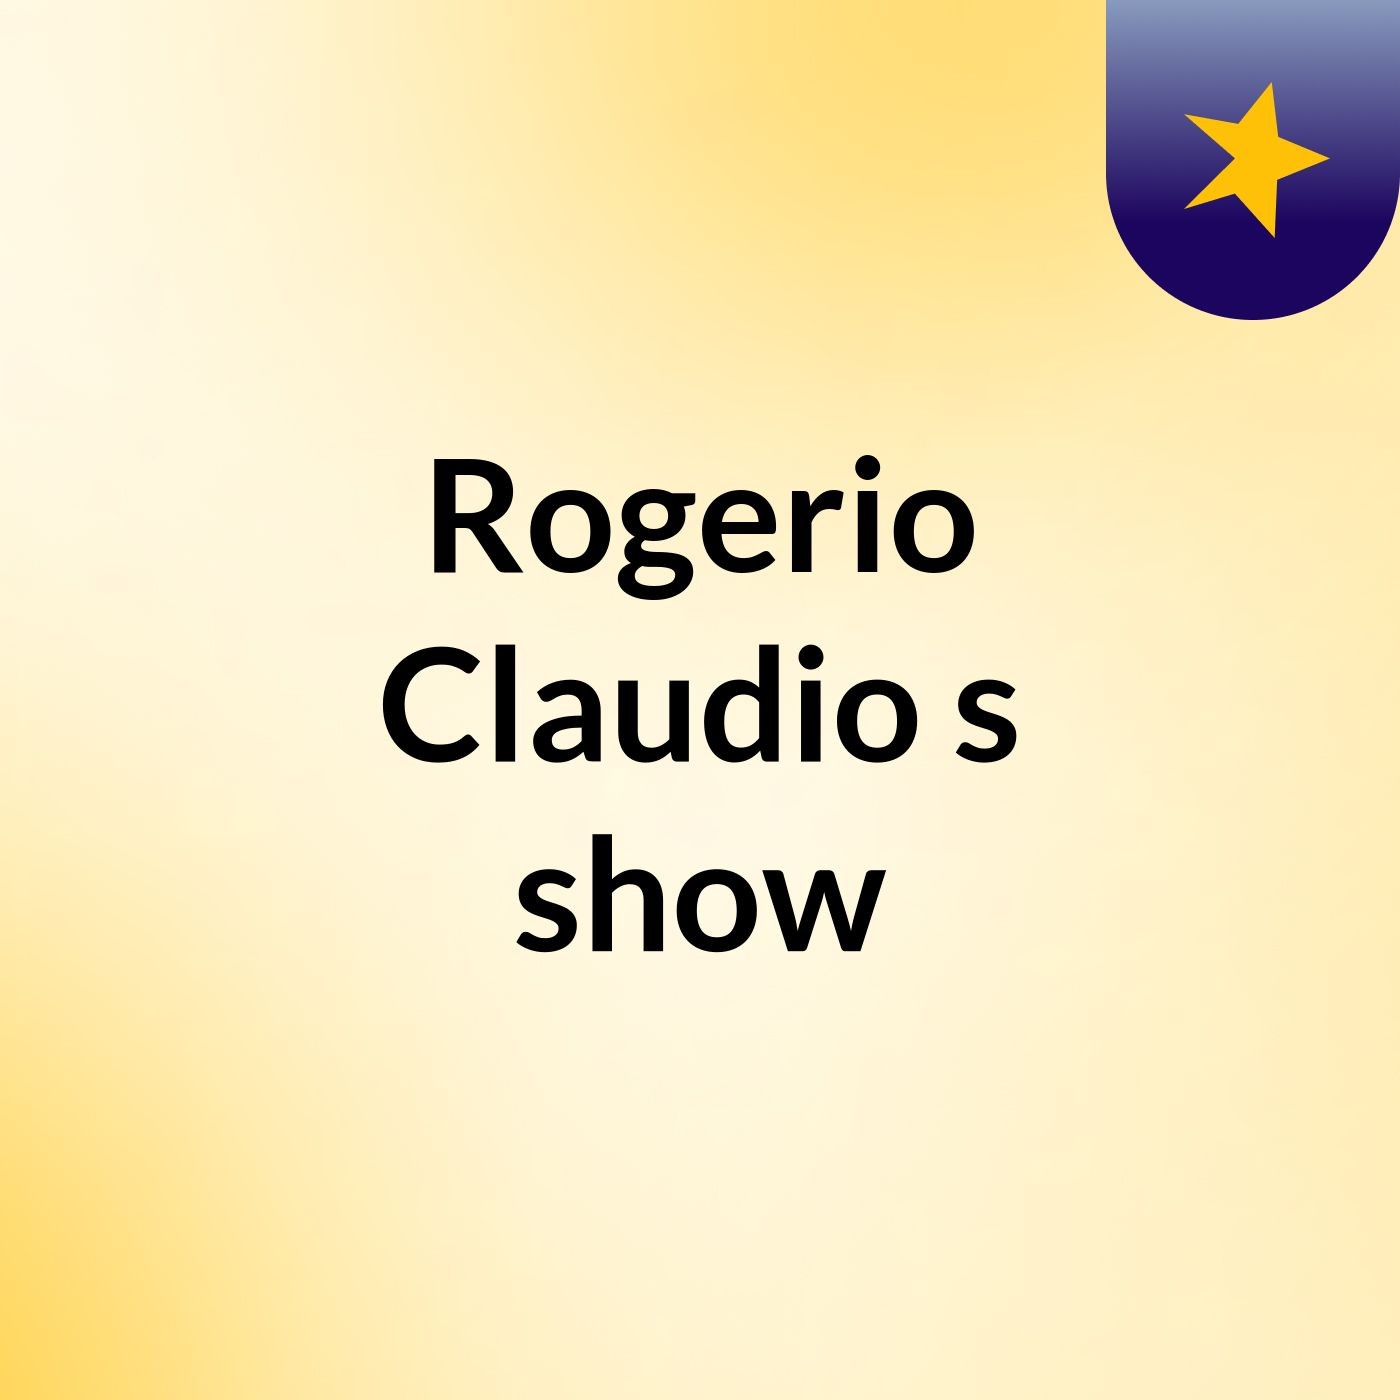 Rogerio Claudio's show